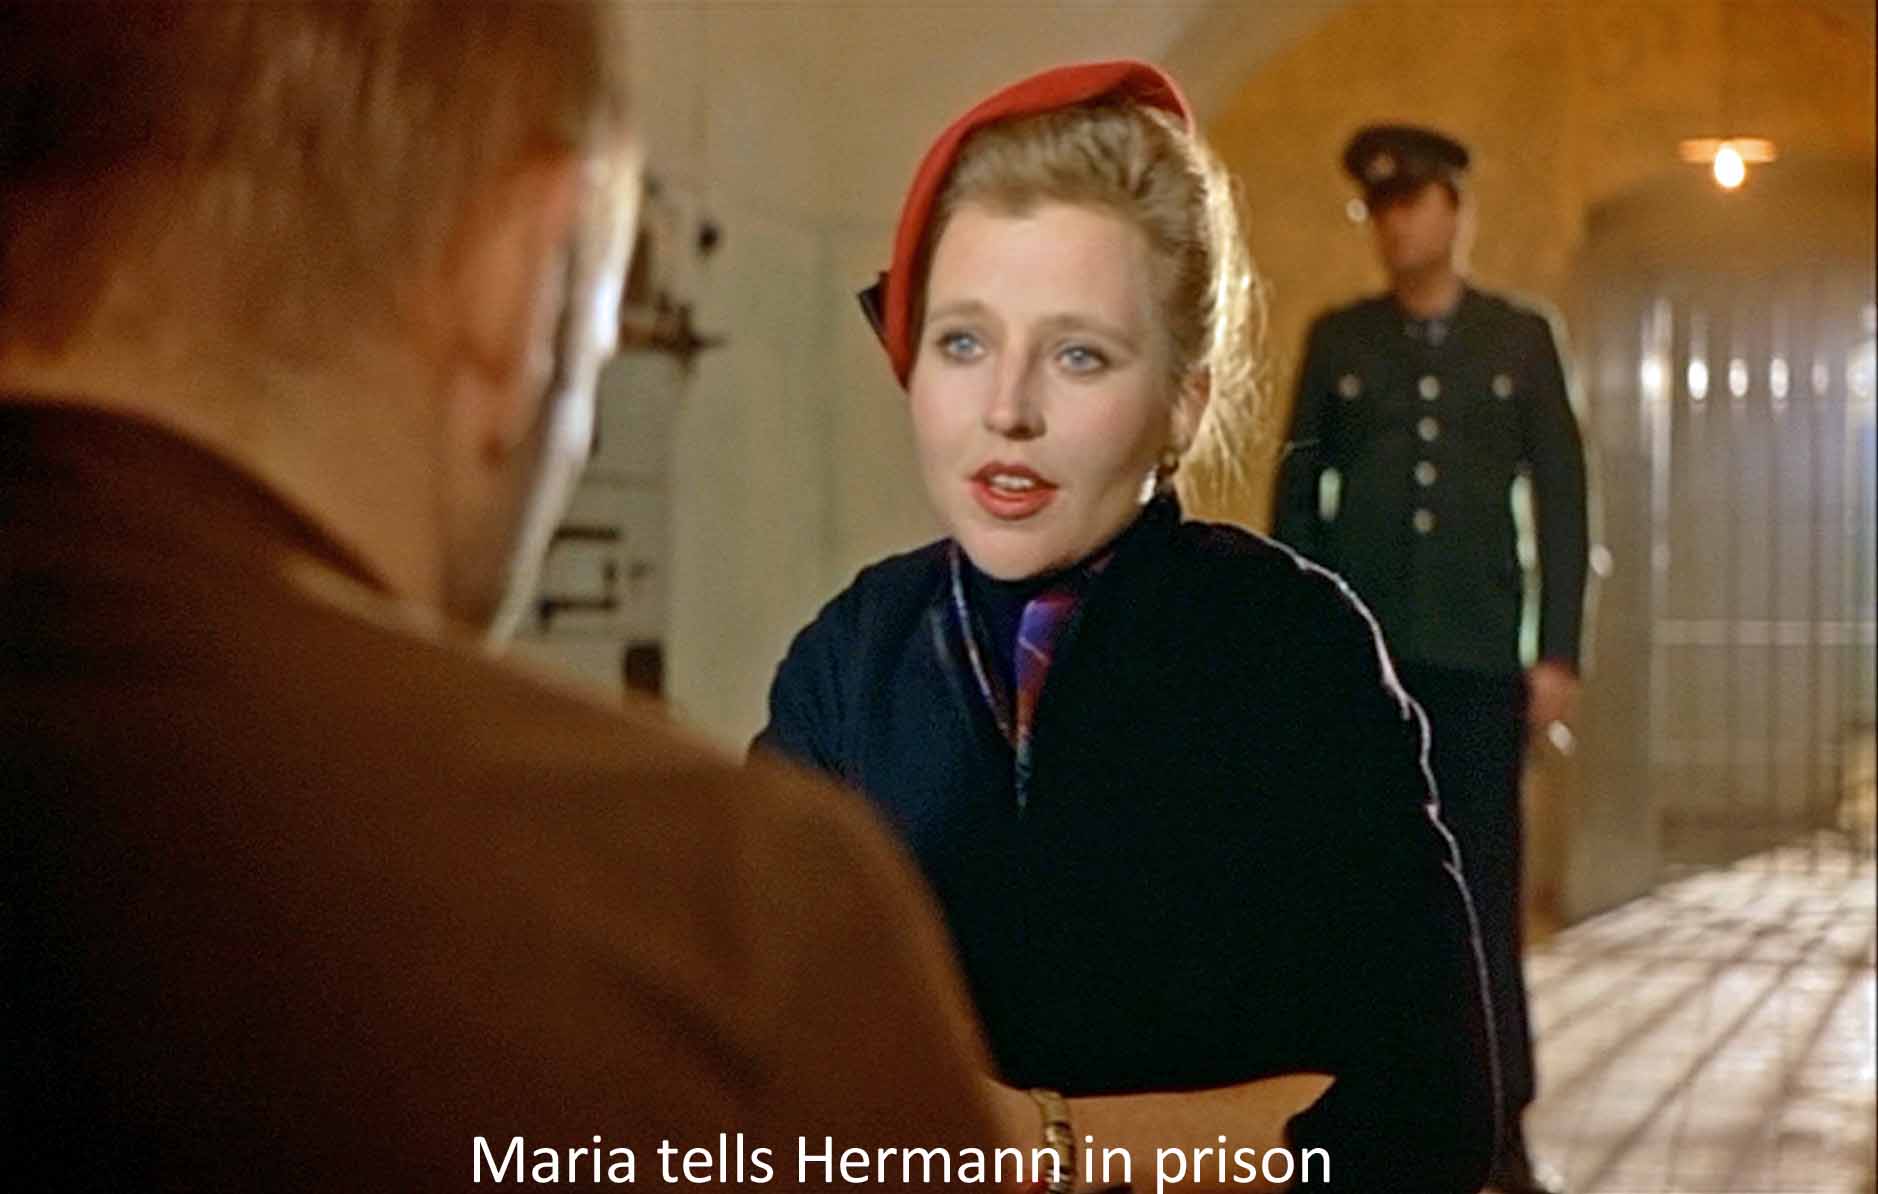 Maria visits Hermann in prison